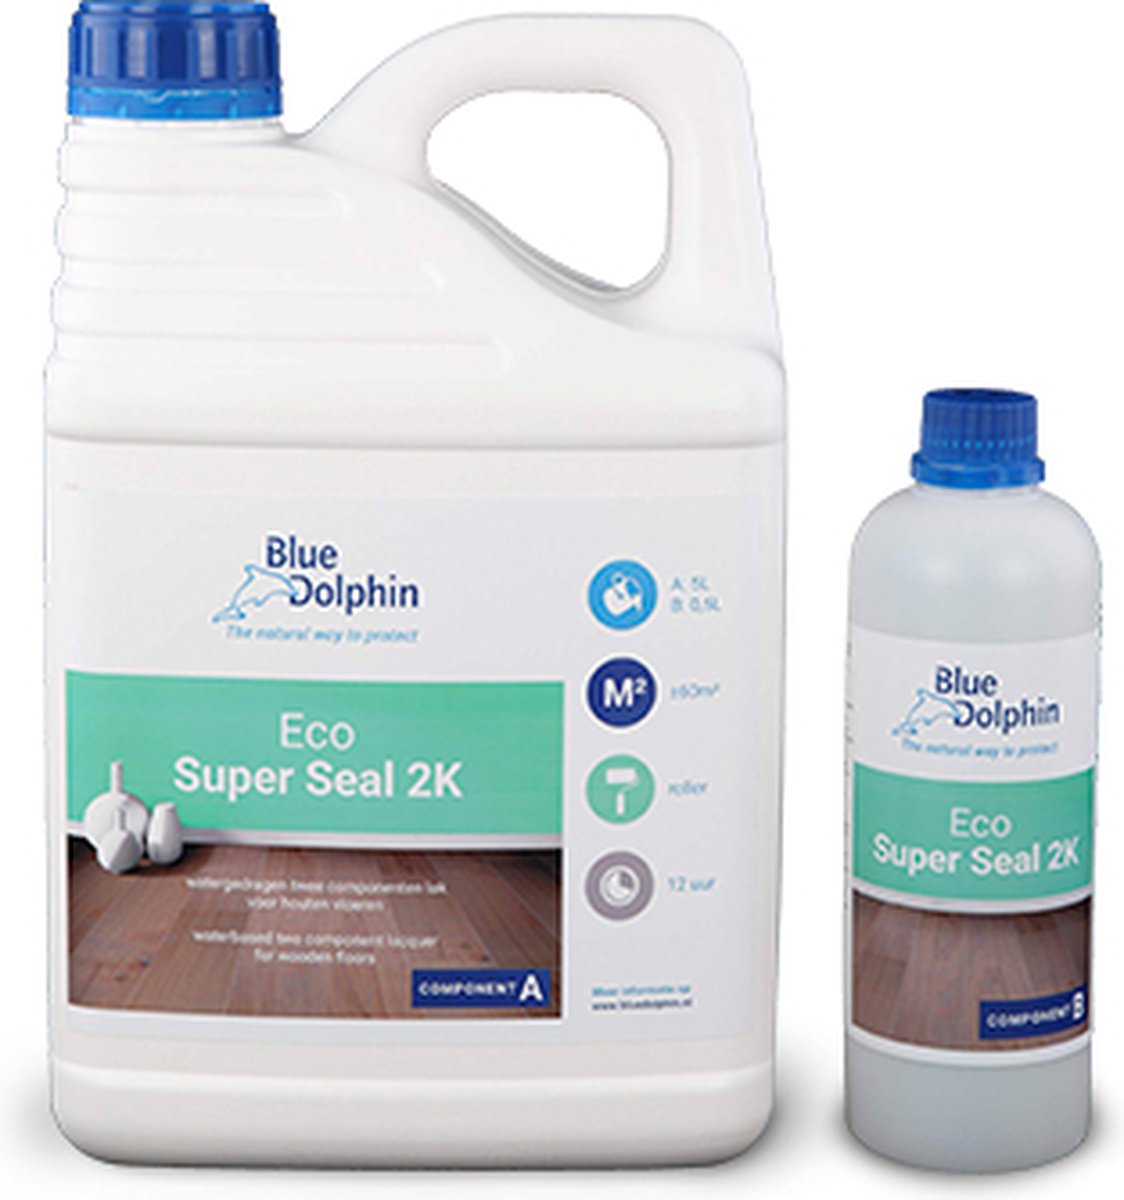 Blue Dolphin Eco Super Seal 2K 5.5 liter